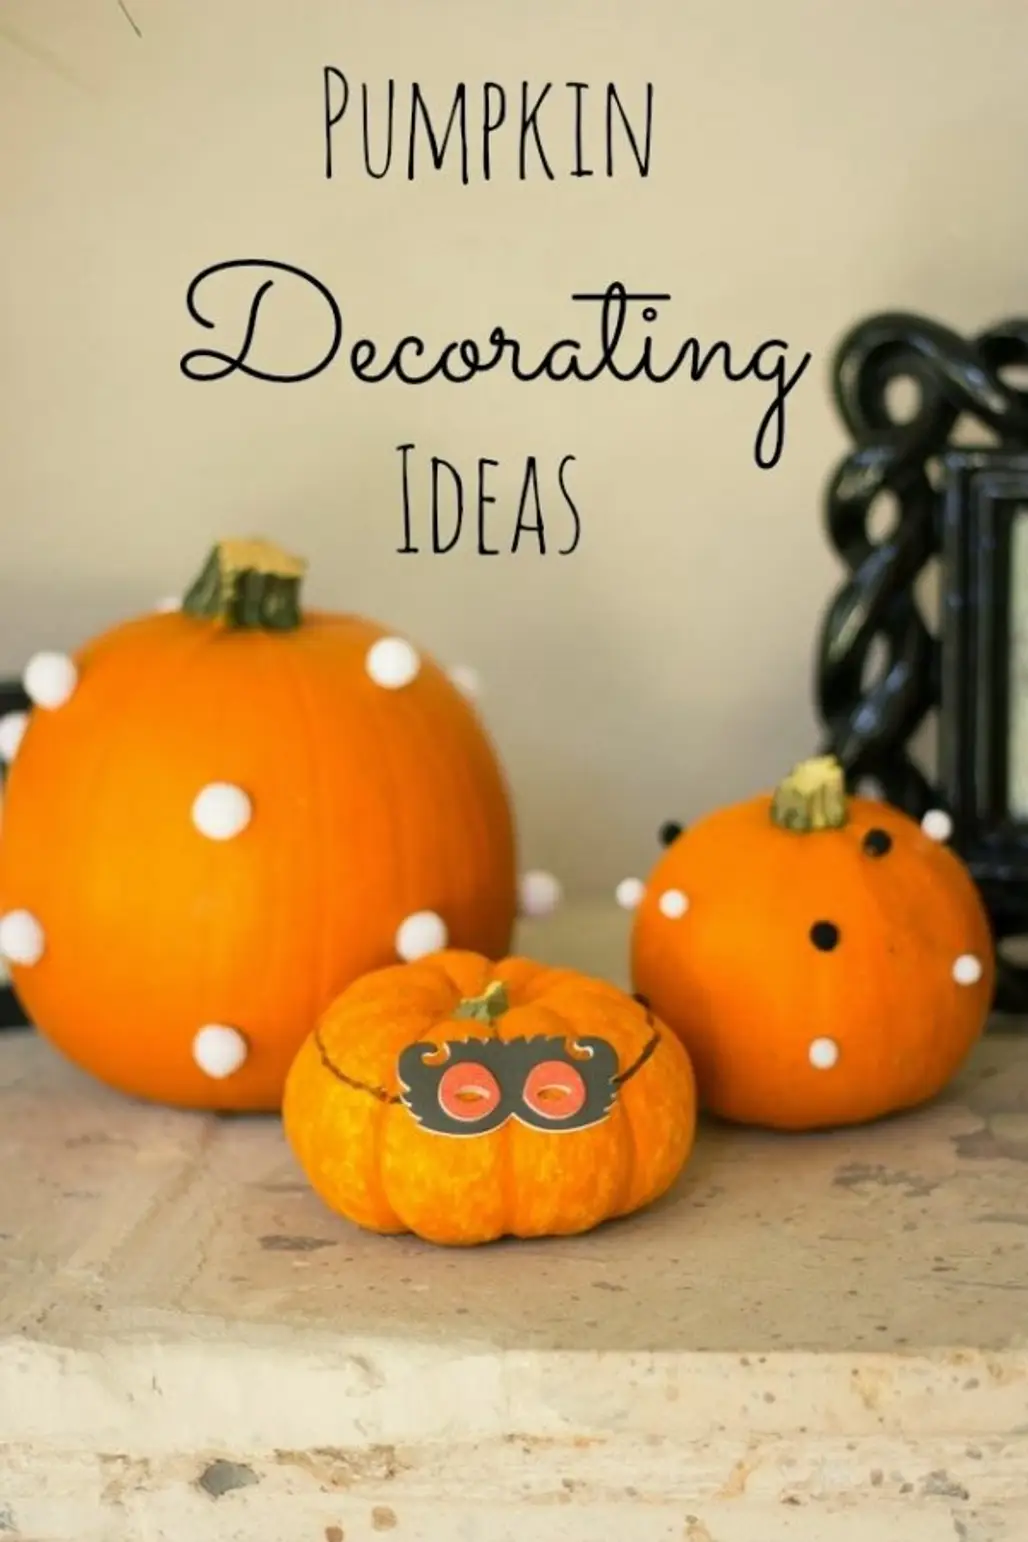 Decorating Pumpkins with Pom Poms